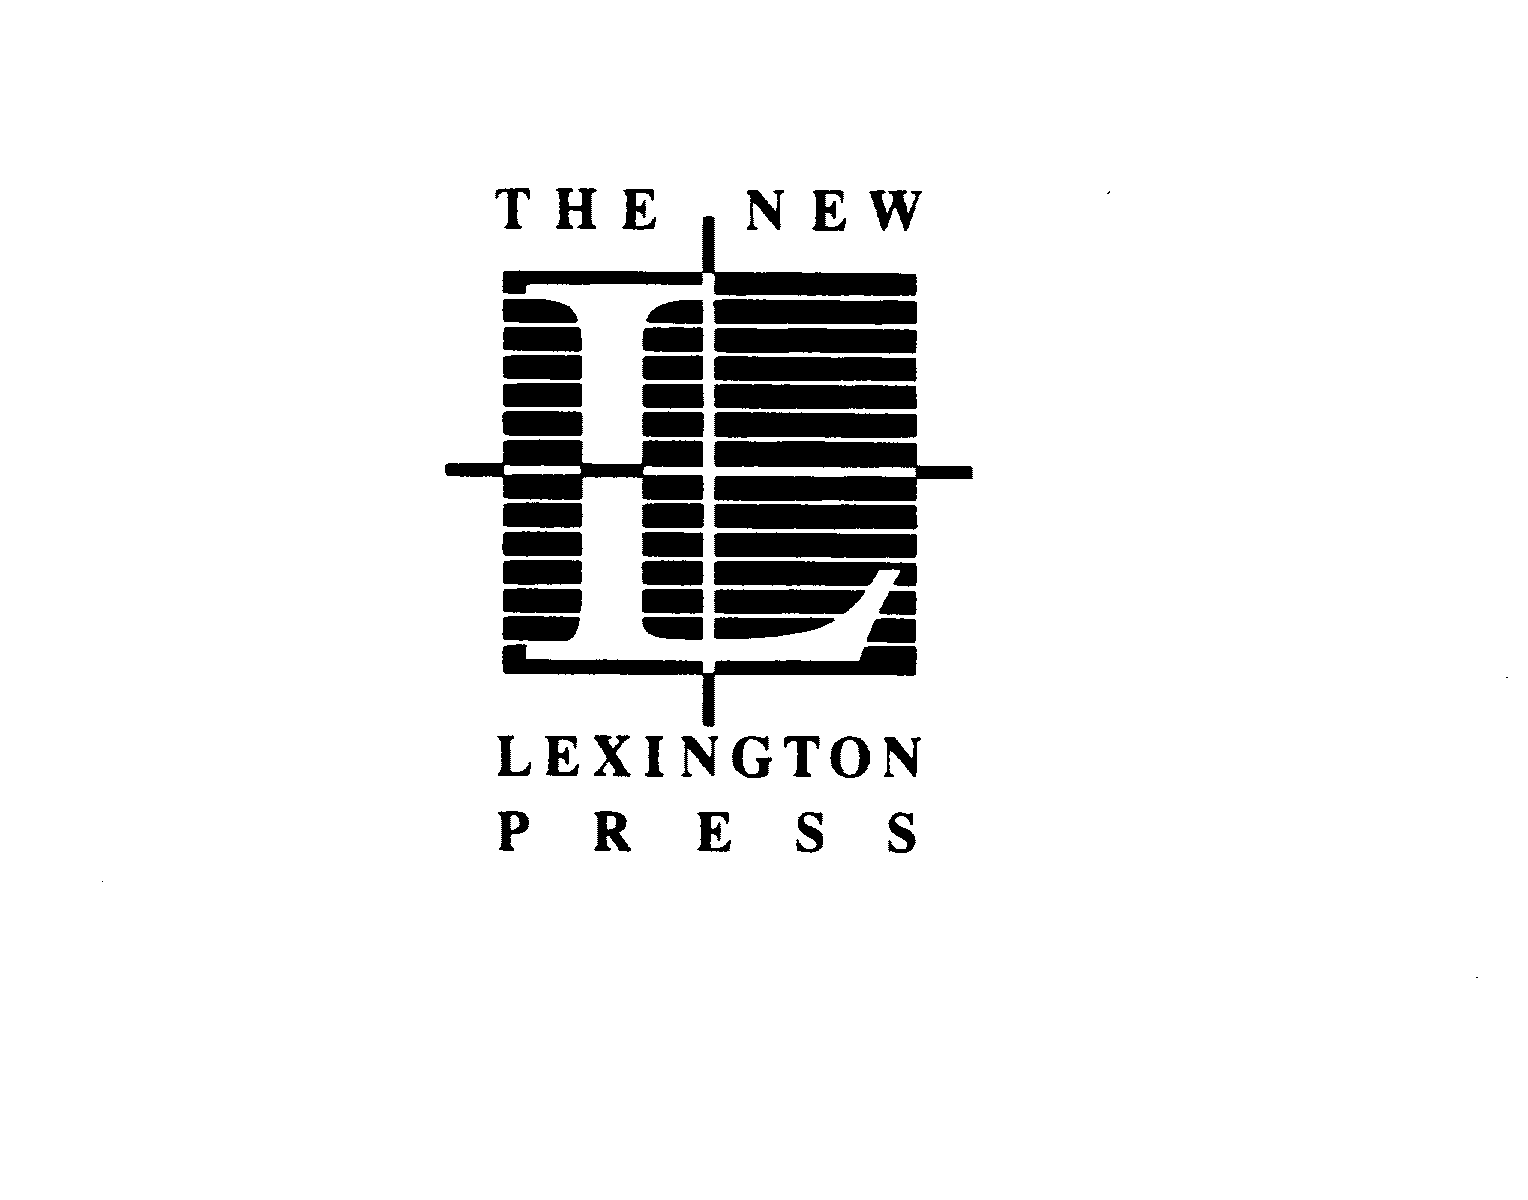  THE NEW LEXINGTON PRESS